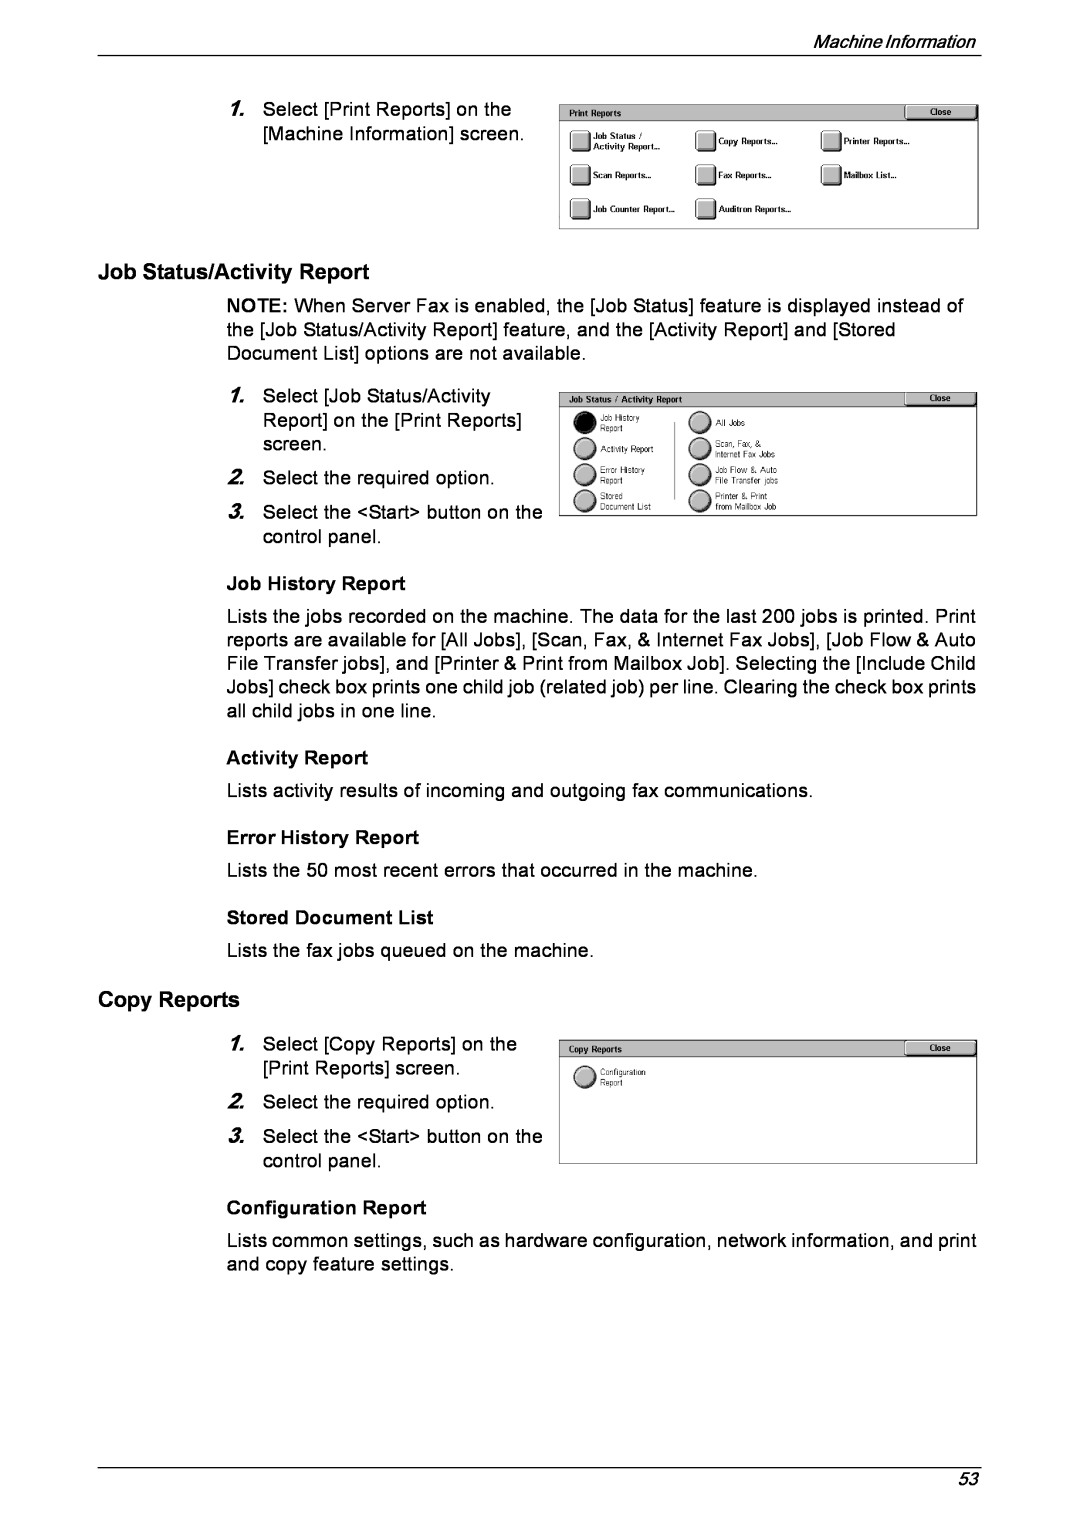 Xerox 5222 manual Job History Report, Activity Report, Error History Report, Stored Document List, Configuration Report 